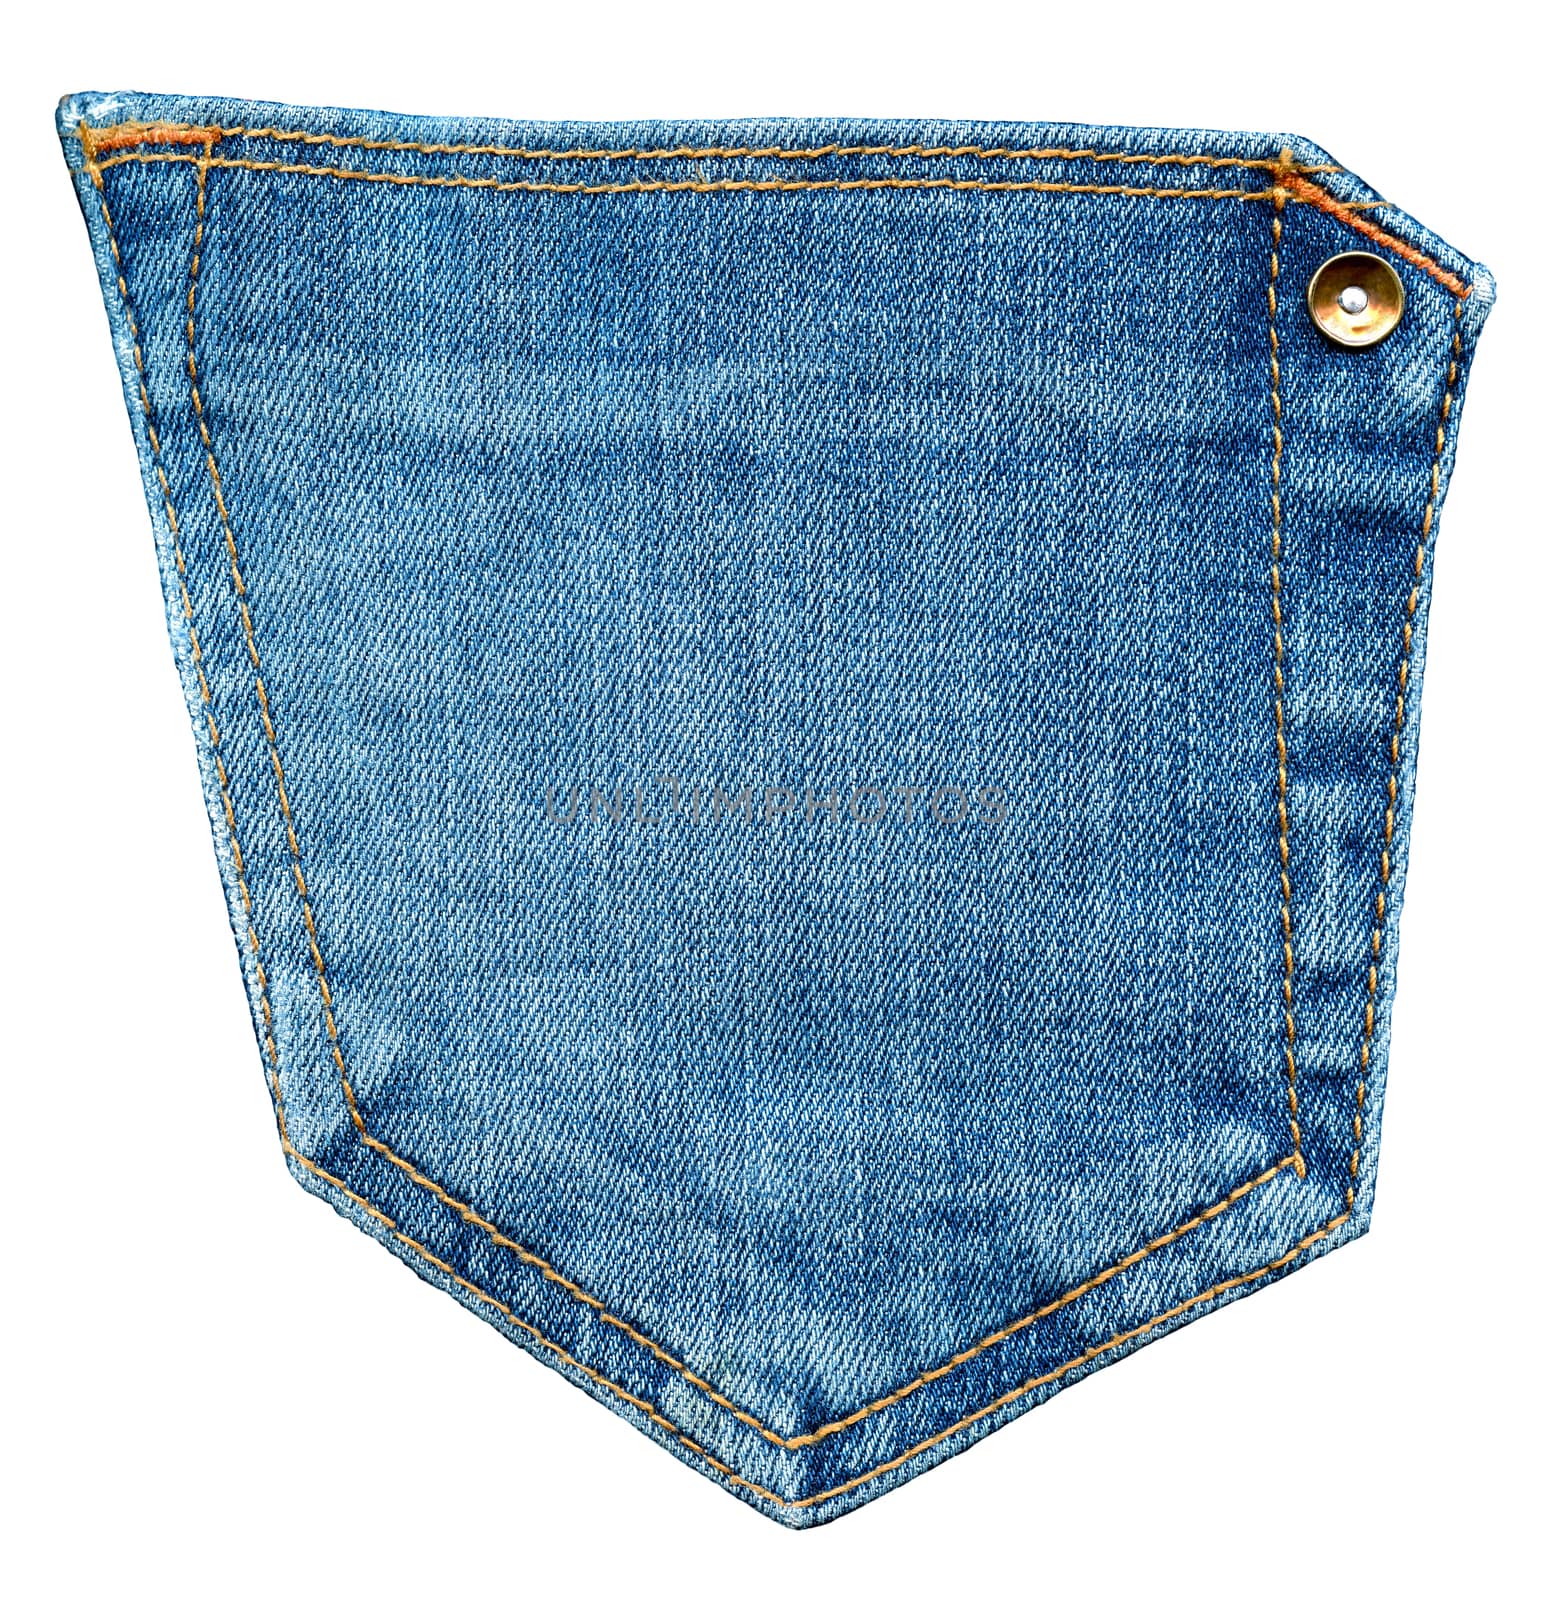 Jeans pocket. Shabby blue denim